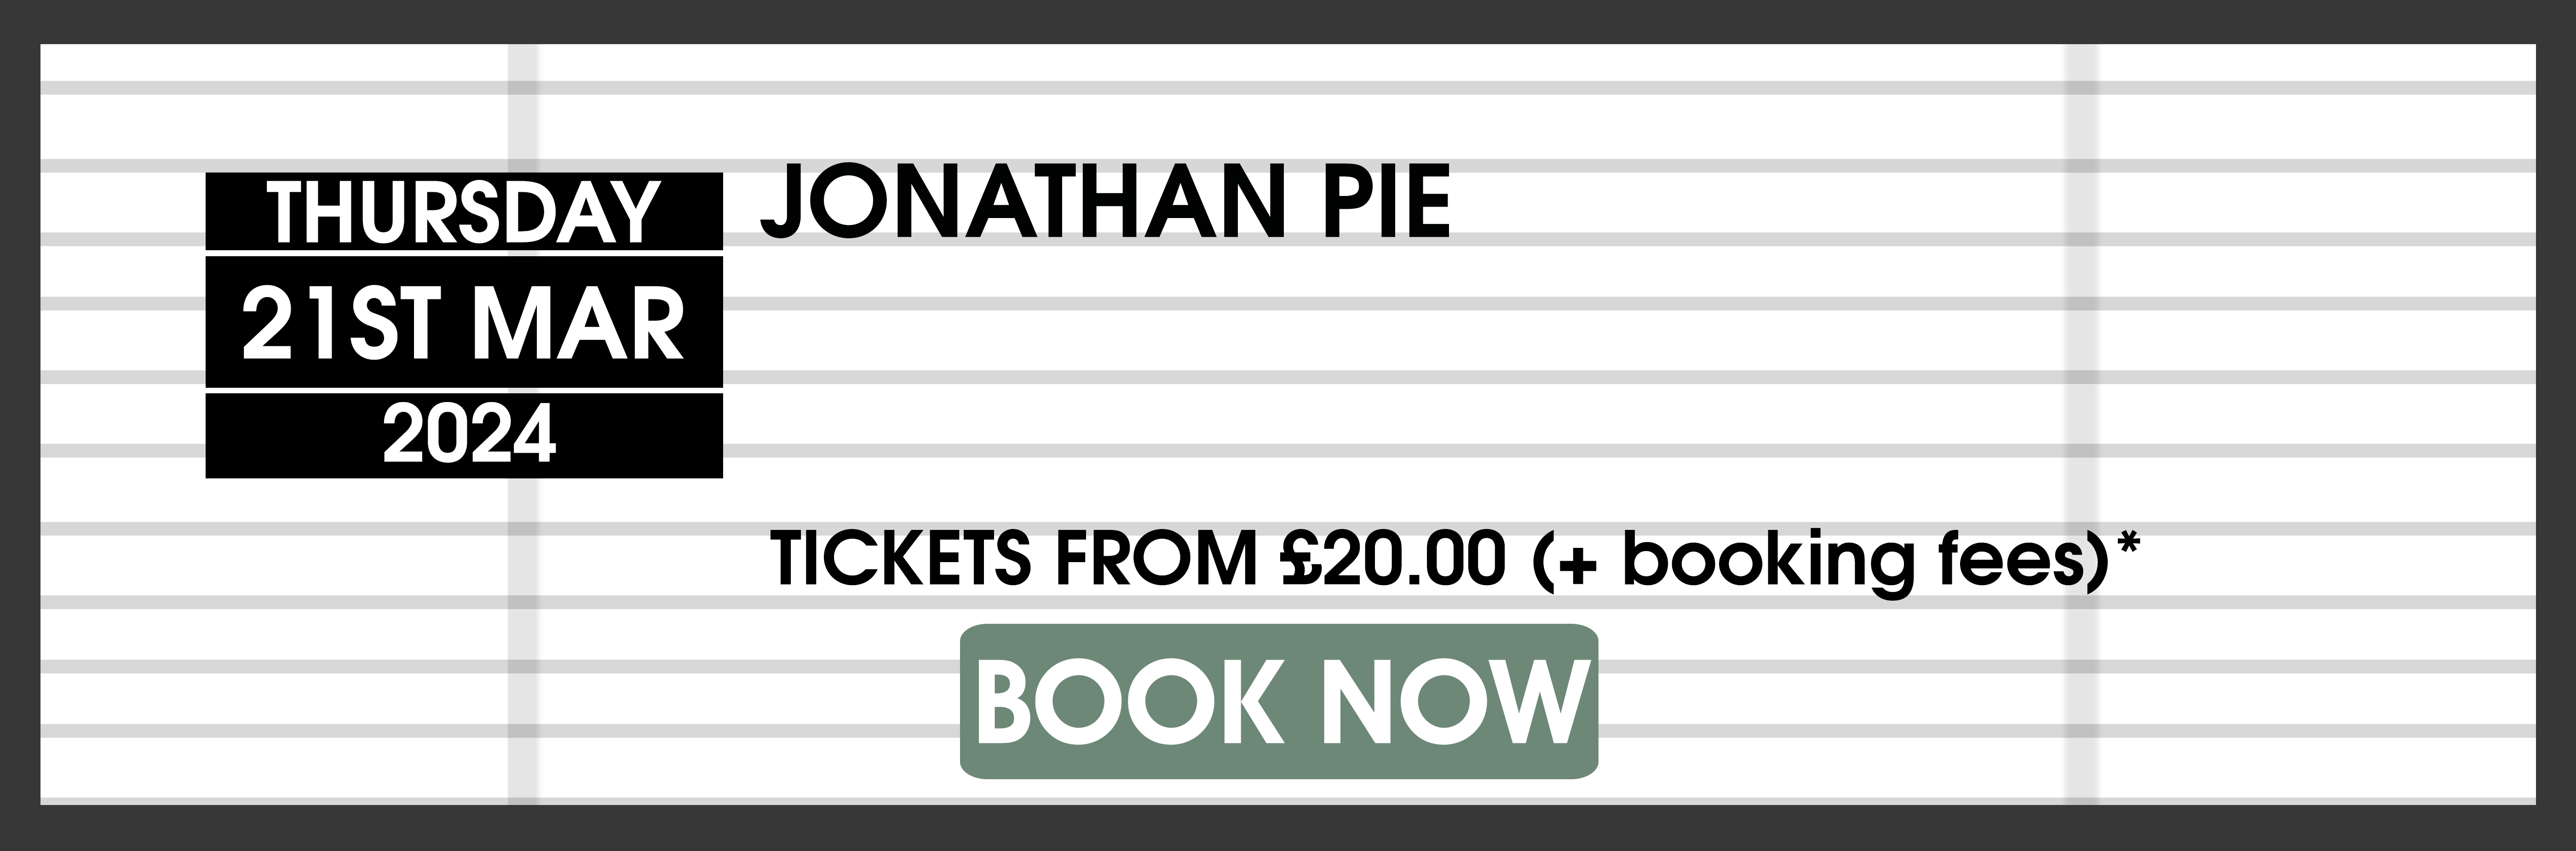 24.03.21 Jonathan Pie BOOK NOW